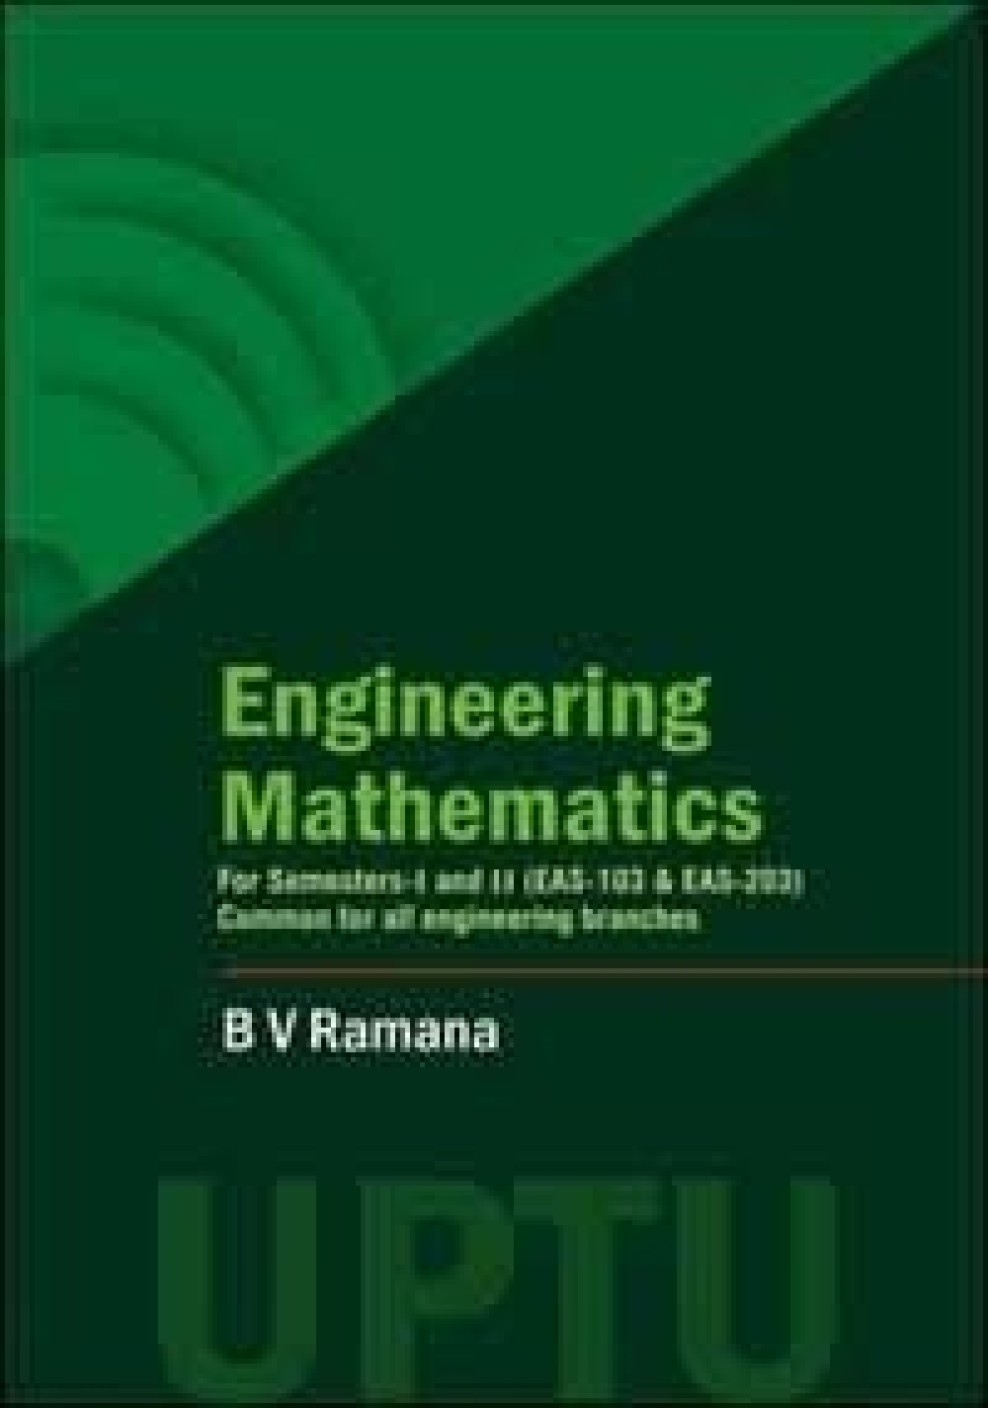 Engineering mathematics by bv ramana pdf reader online